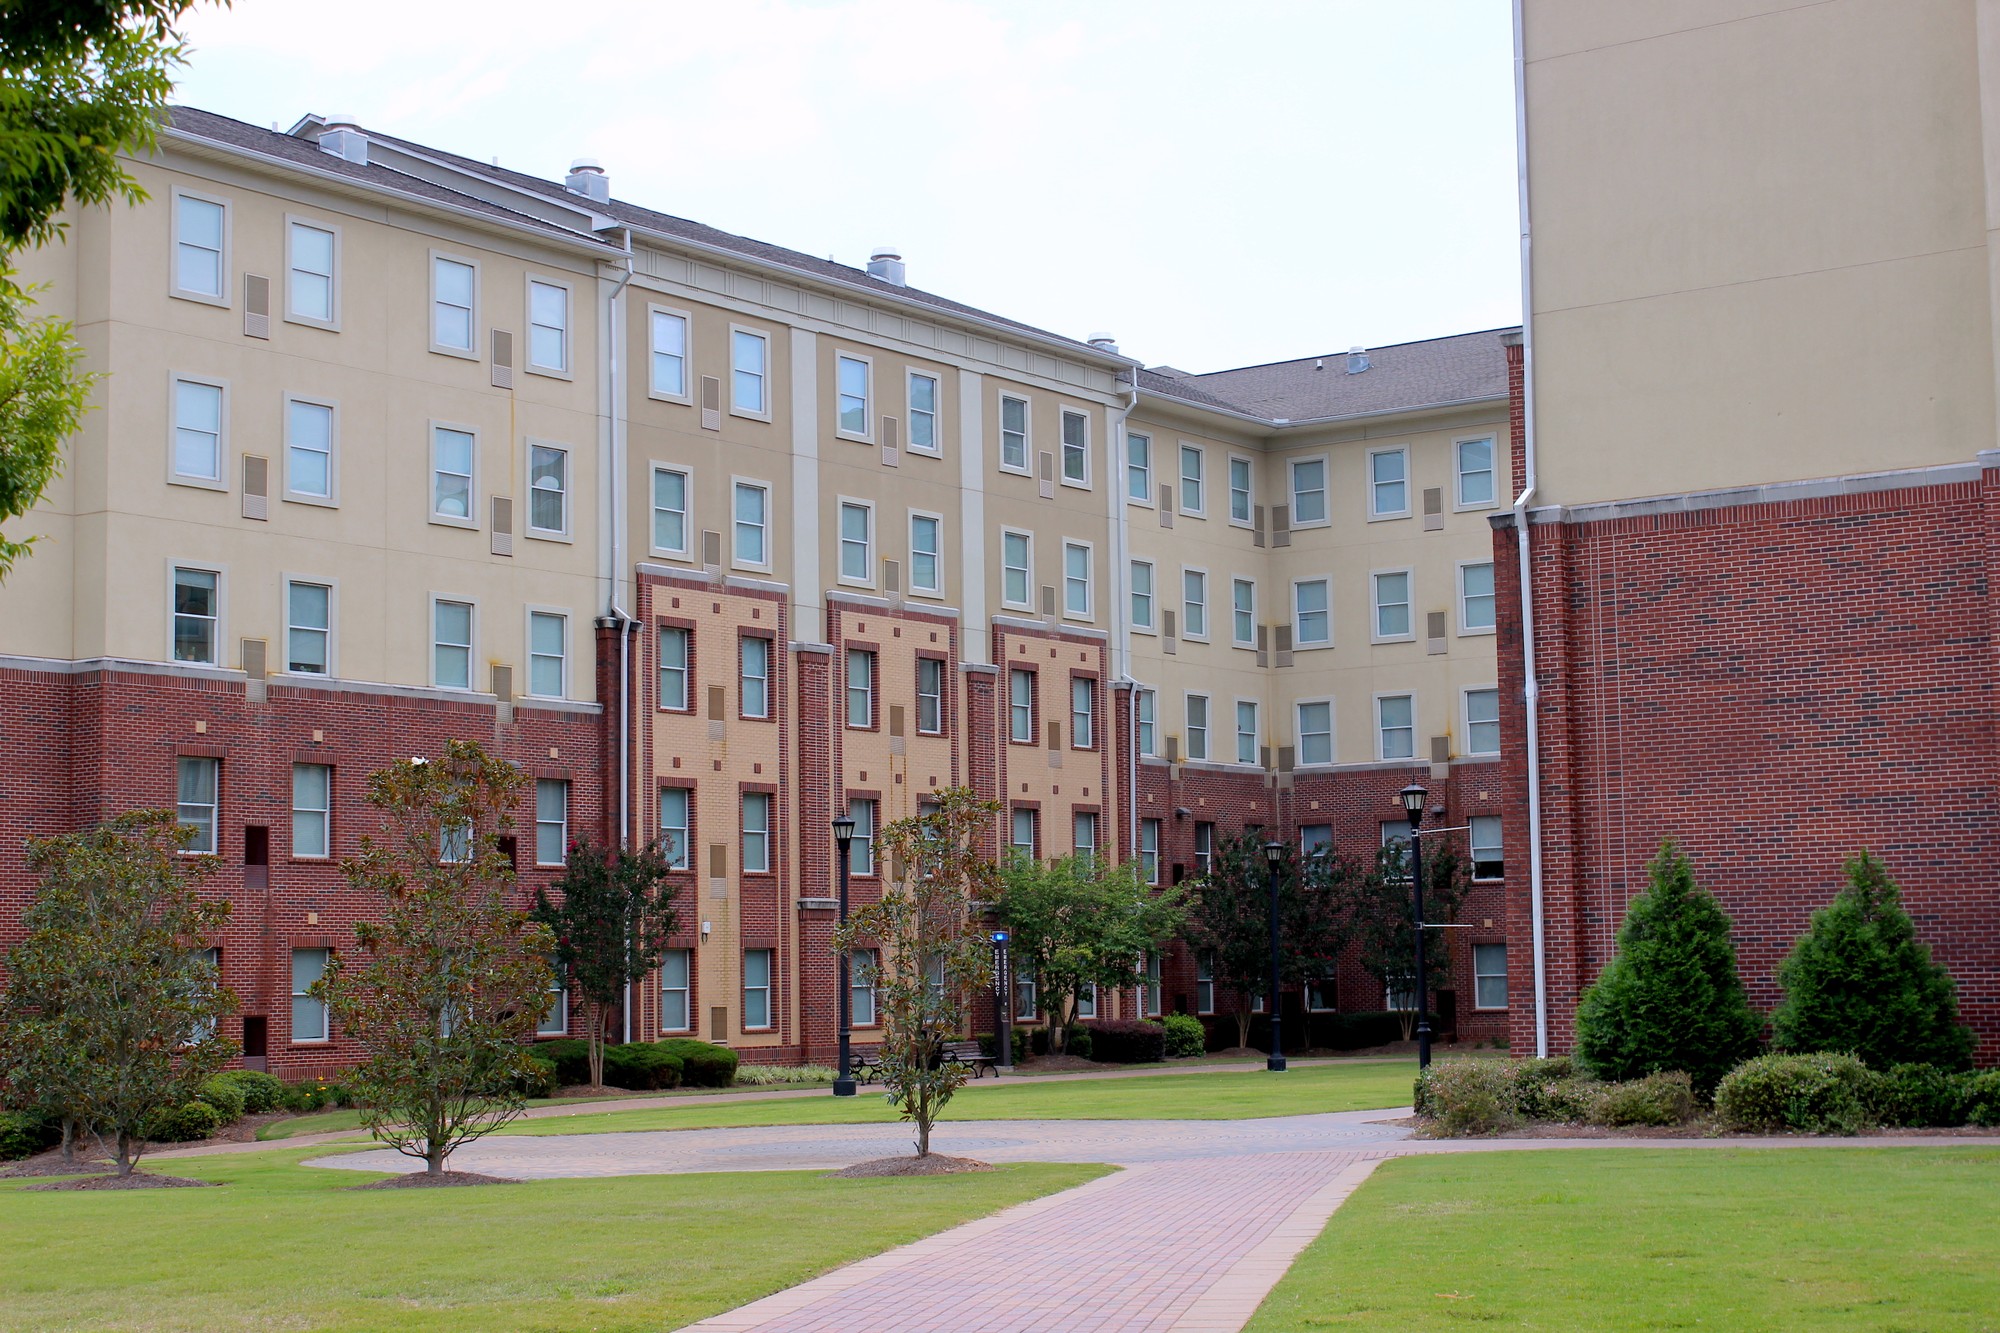 City Council denies proposal for student apartment complex